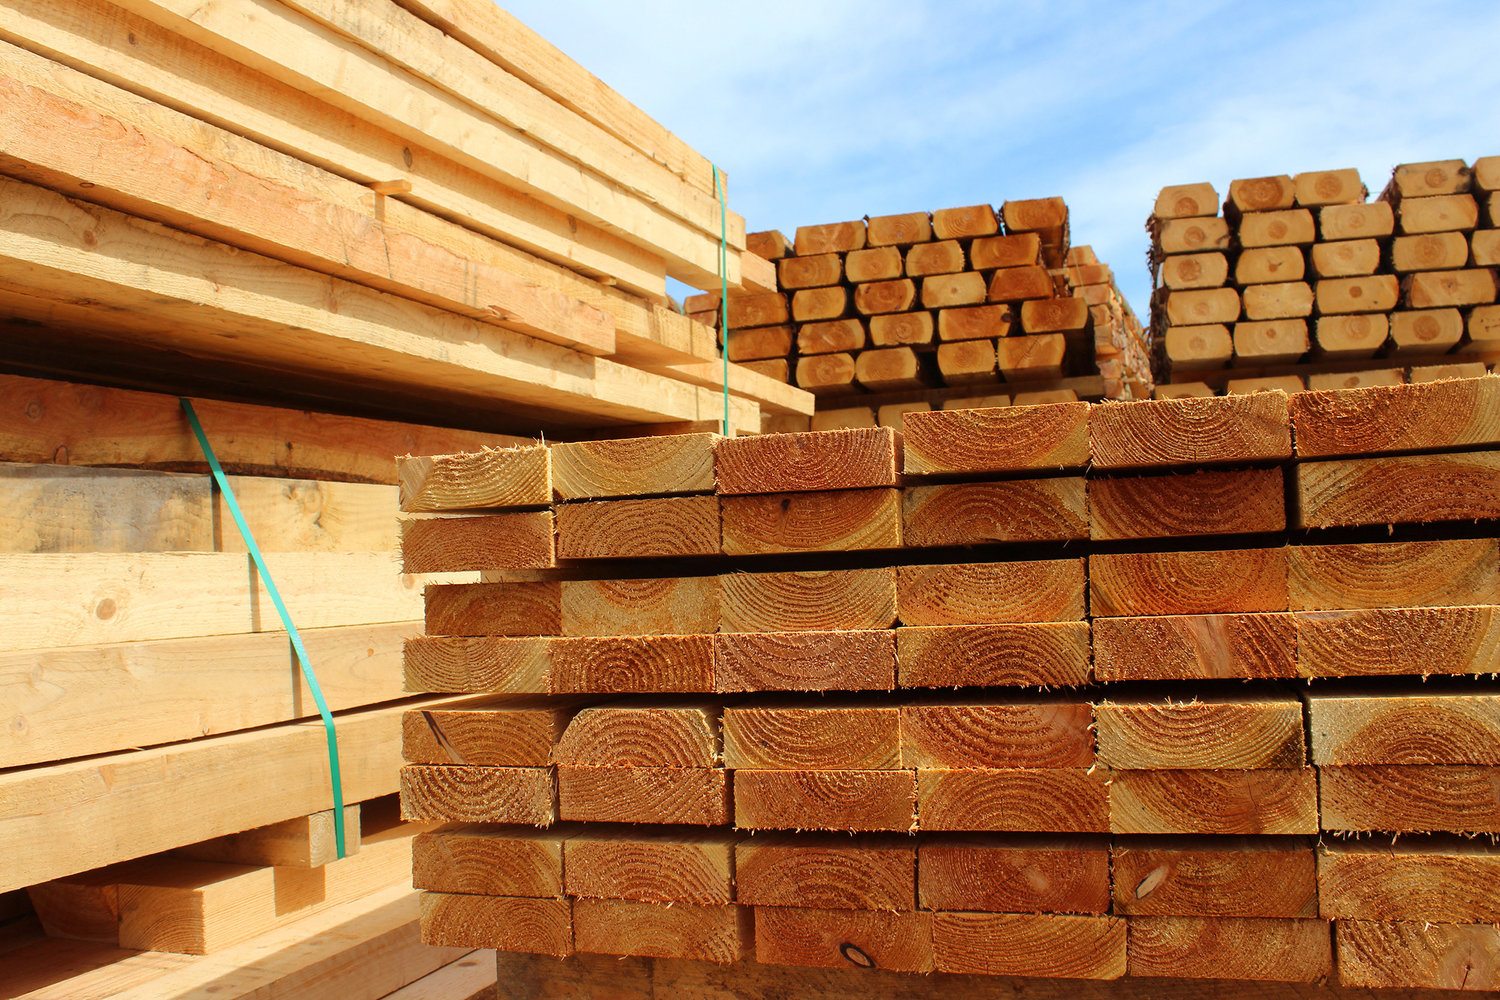 Chilliwack Lumber Supplies Pioneer Carries a Wide Variety of Lumber